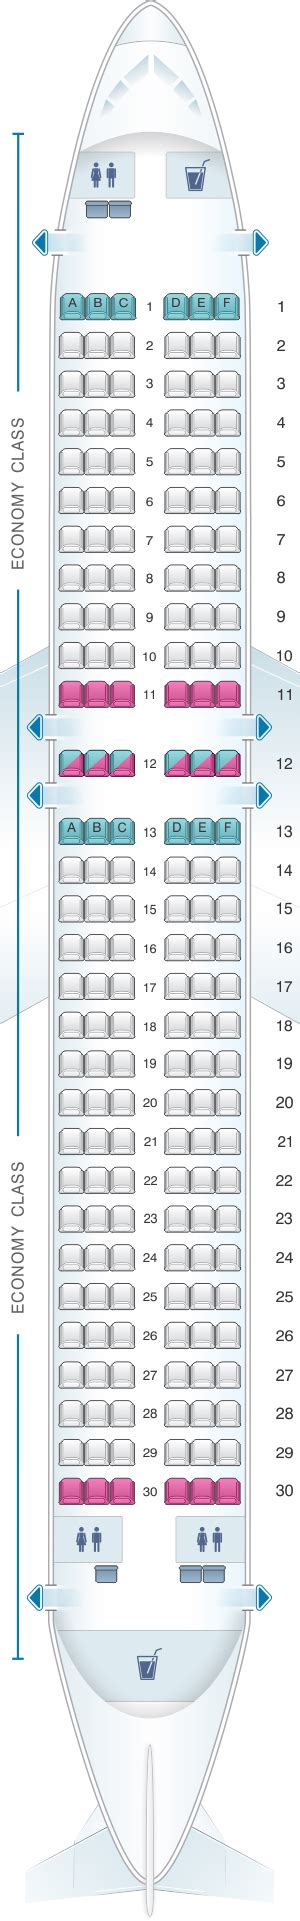 Seat Map Novair Airbus A320 200 Seatmaestro